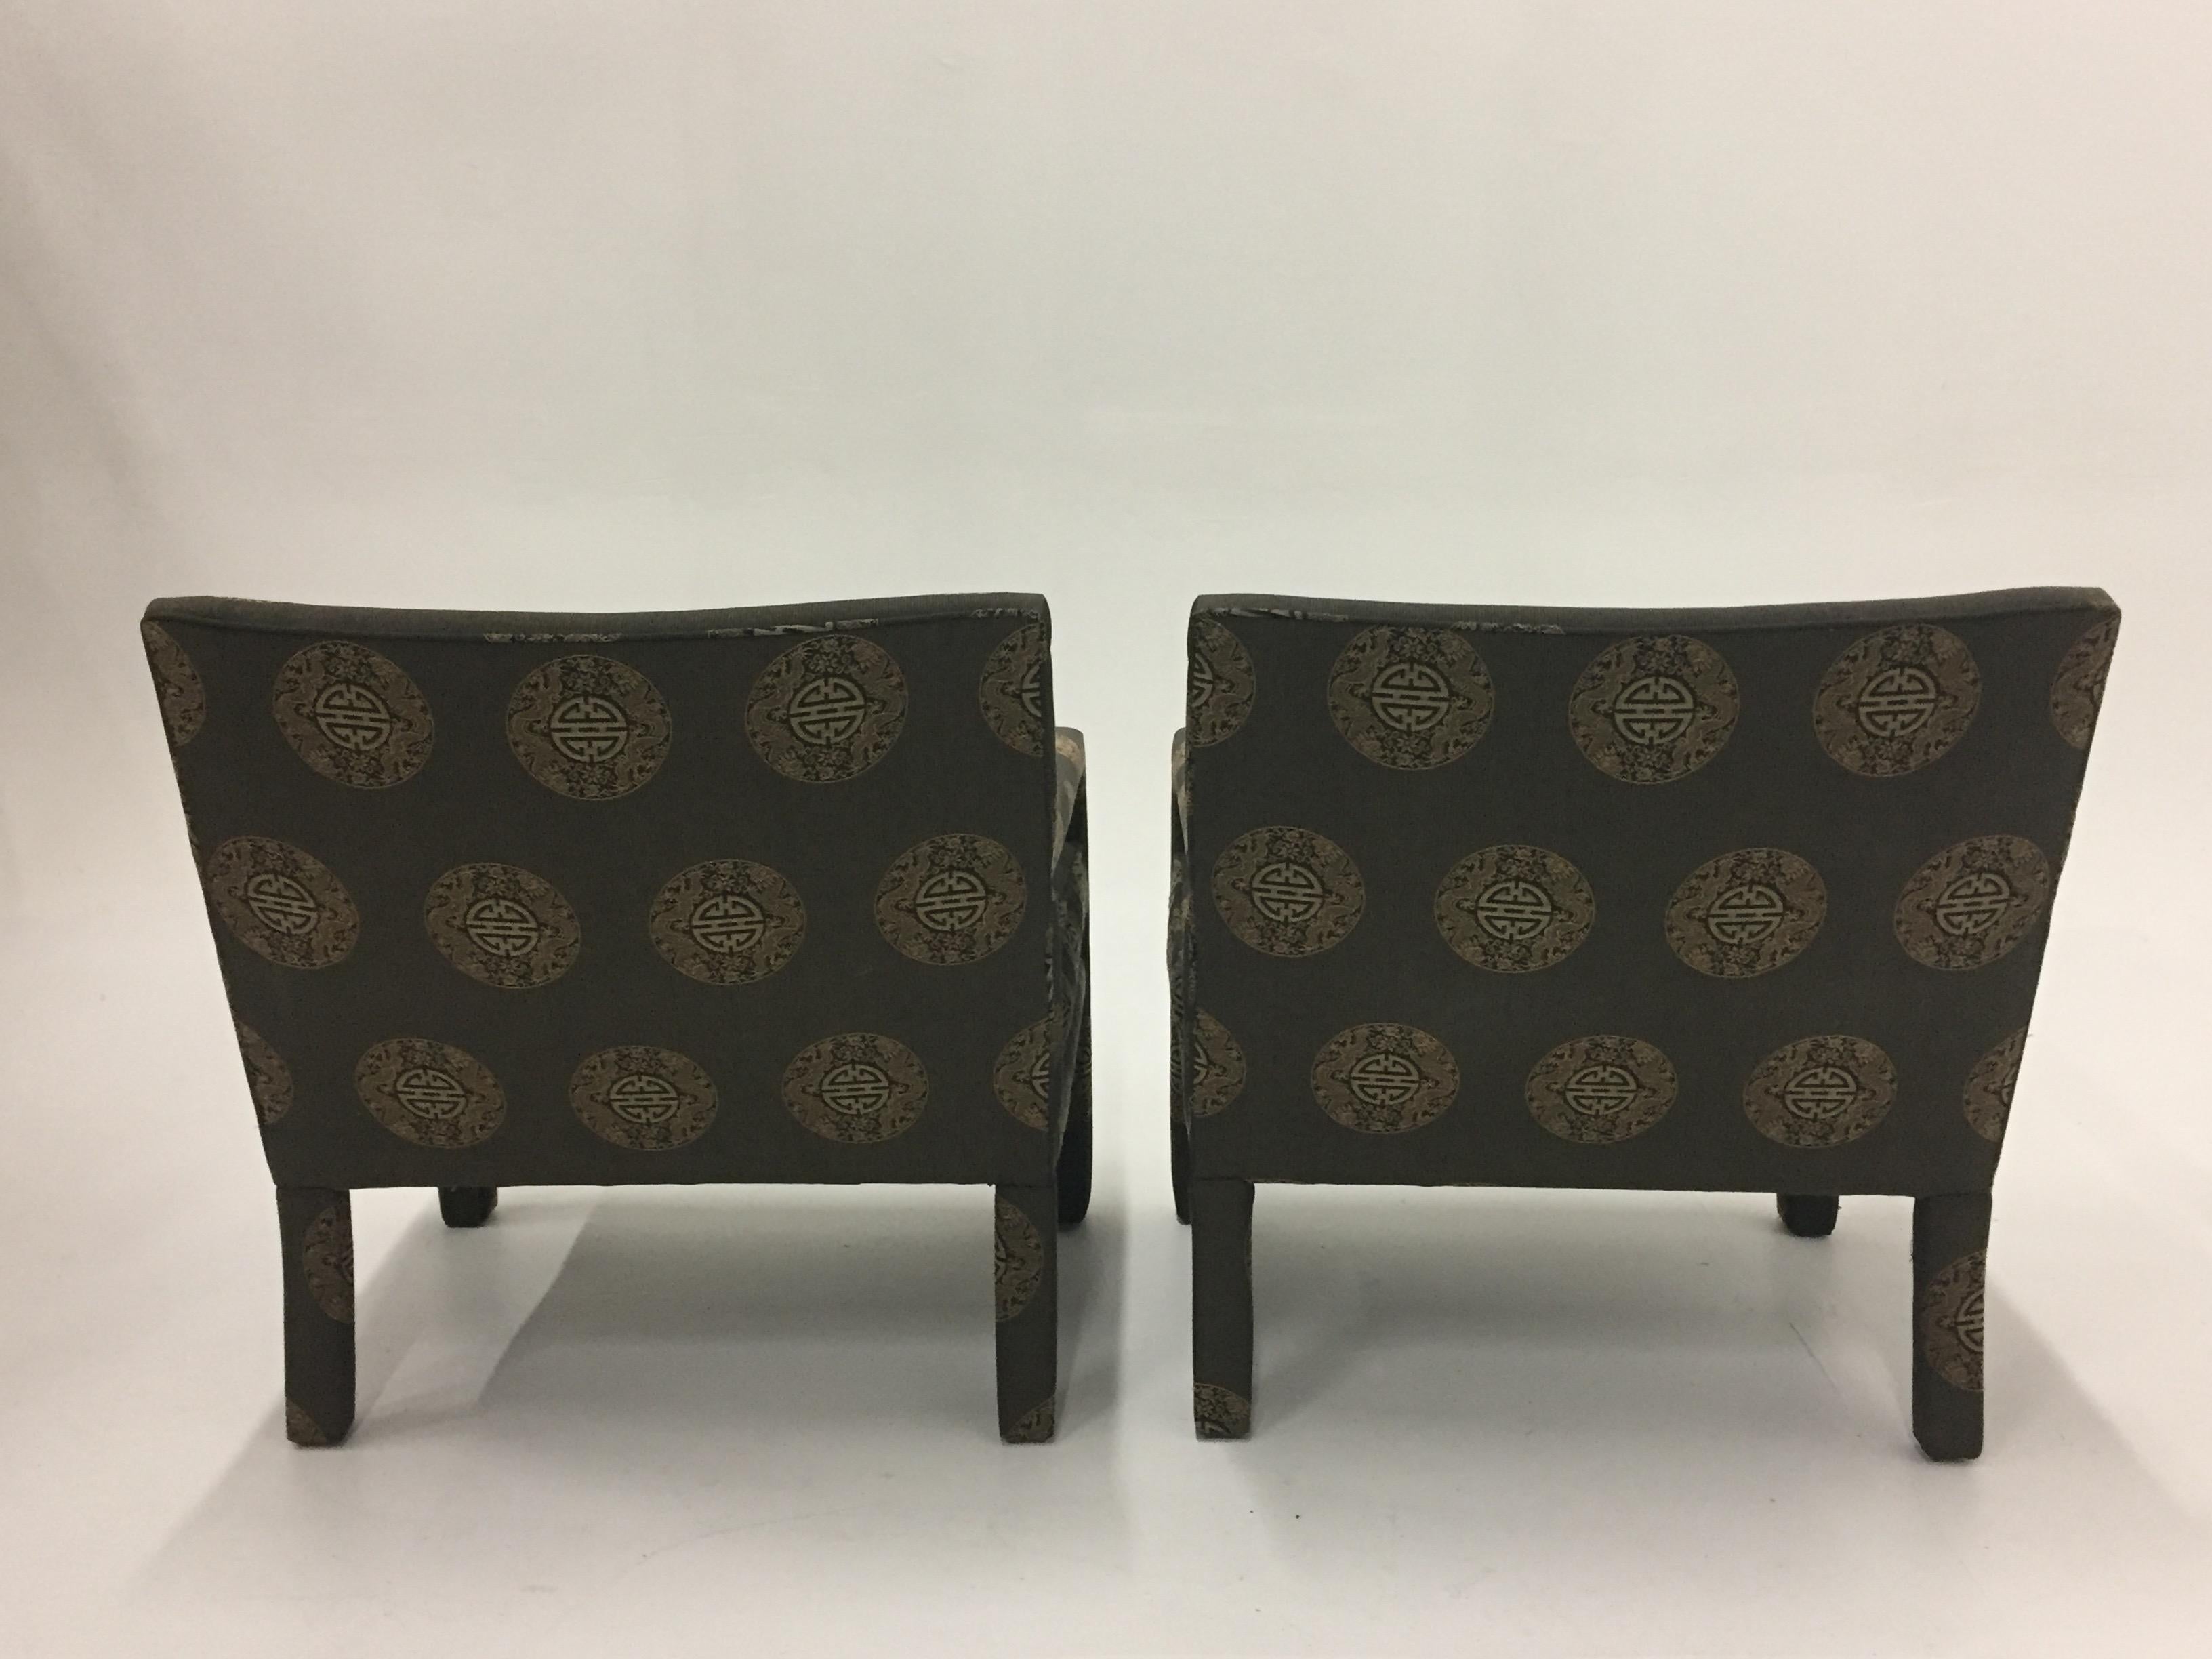 North American Pair of Luxurious Sleek Mid-Century Modern Upholstered Club Armchairs